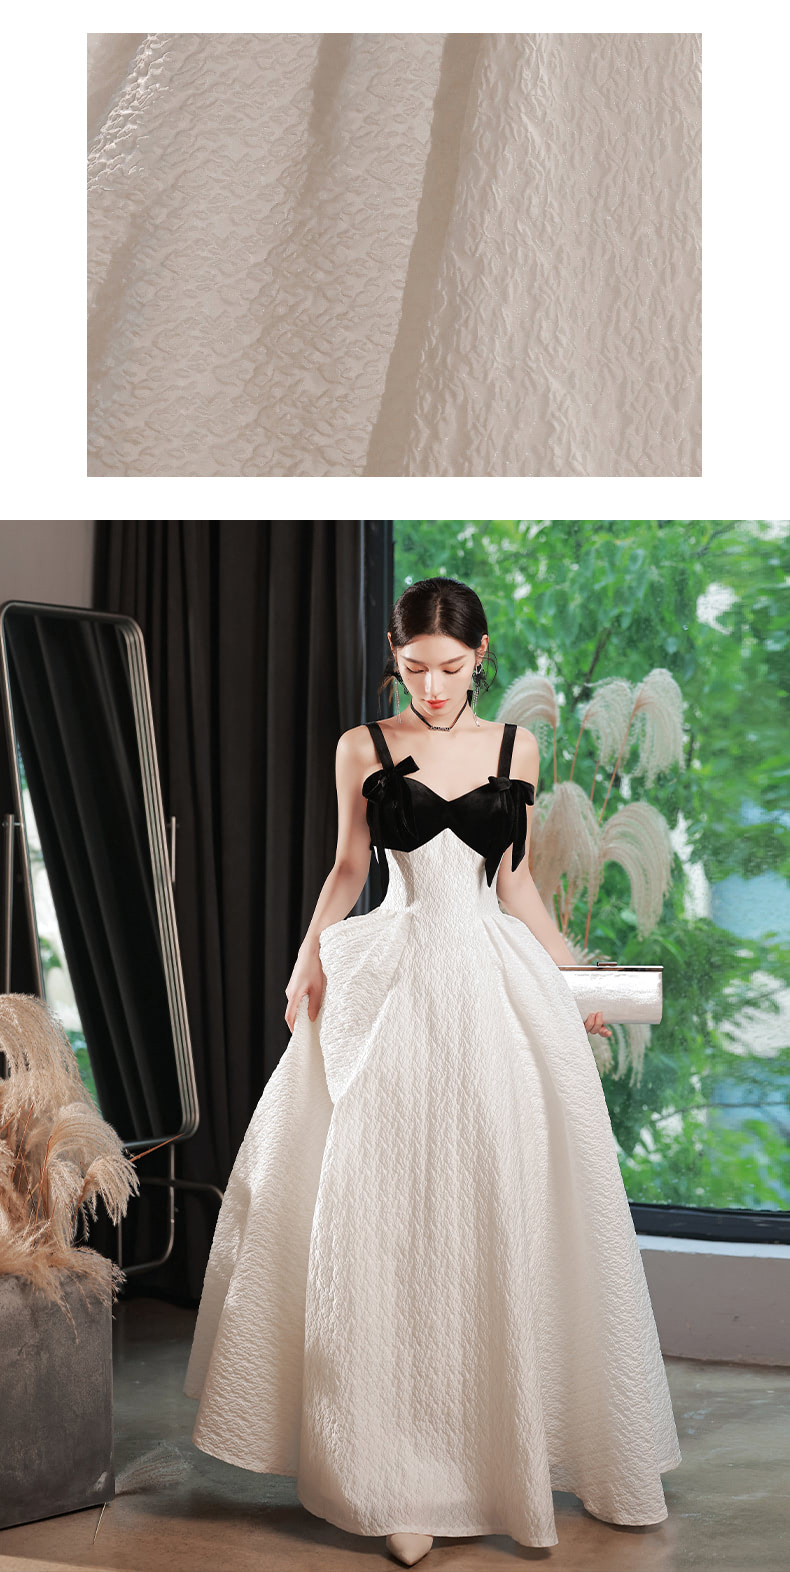 A-Line-Slip-Maxi-Evening-Dress-Boutique-Formal-Outfit-Plus-Size11.jpg